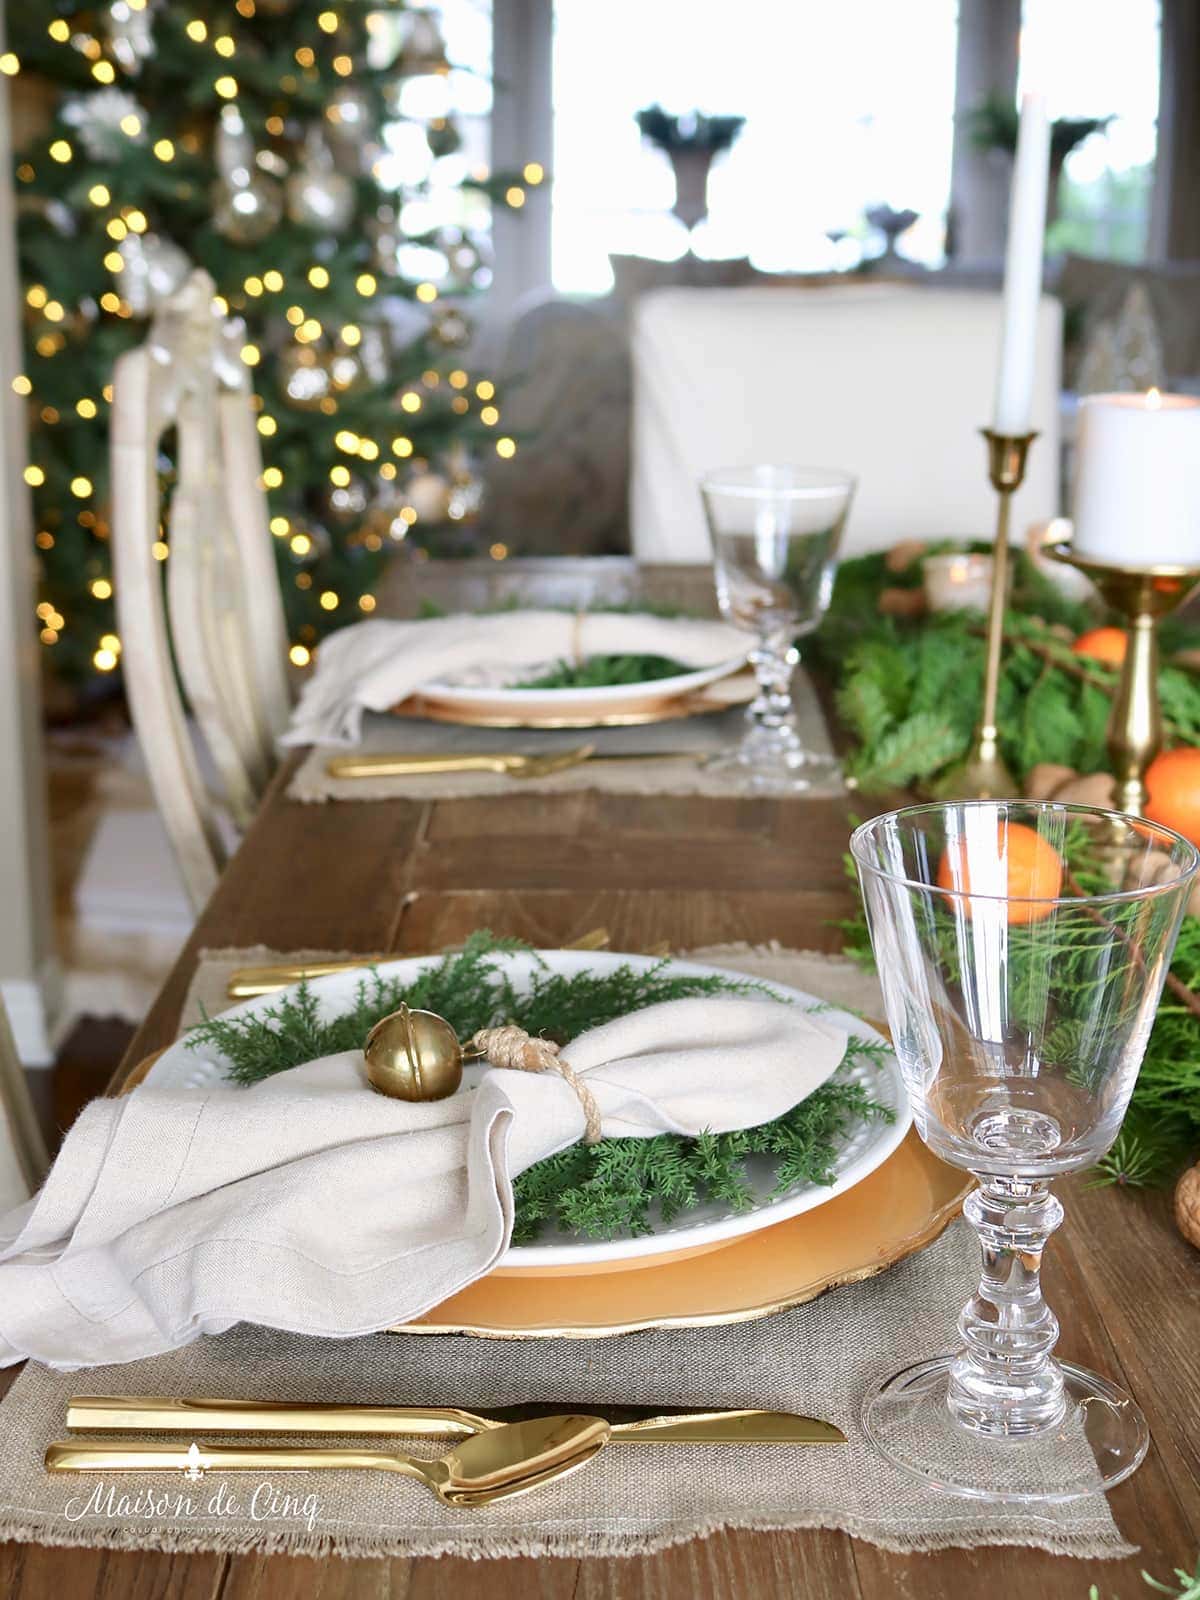 Maison de Cinq Christmas Table 2020 on Cindy Hattersley's blog